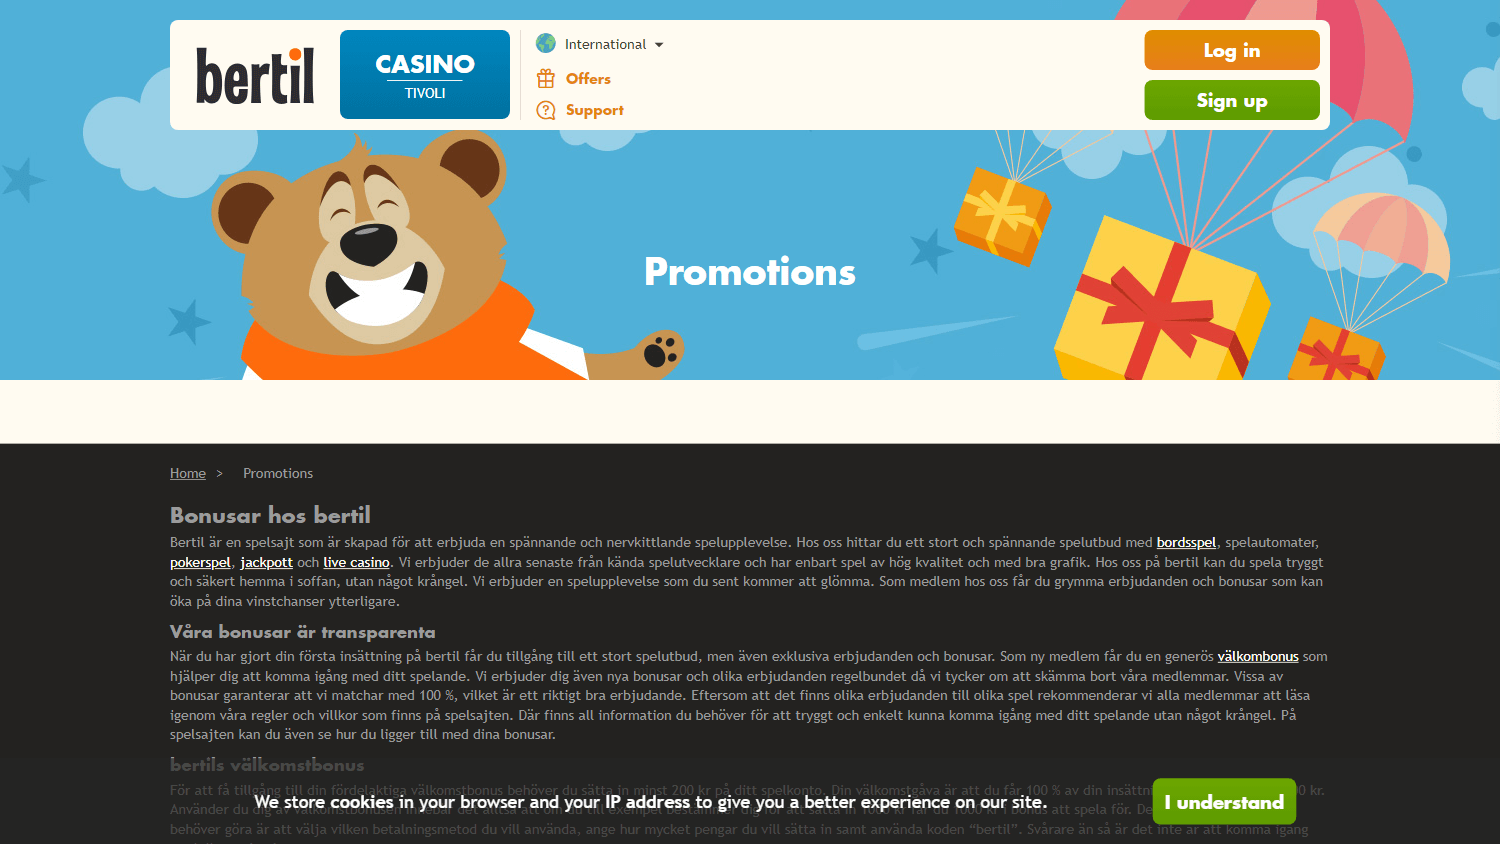 bertil_casino_promotions_desktop